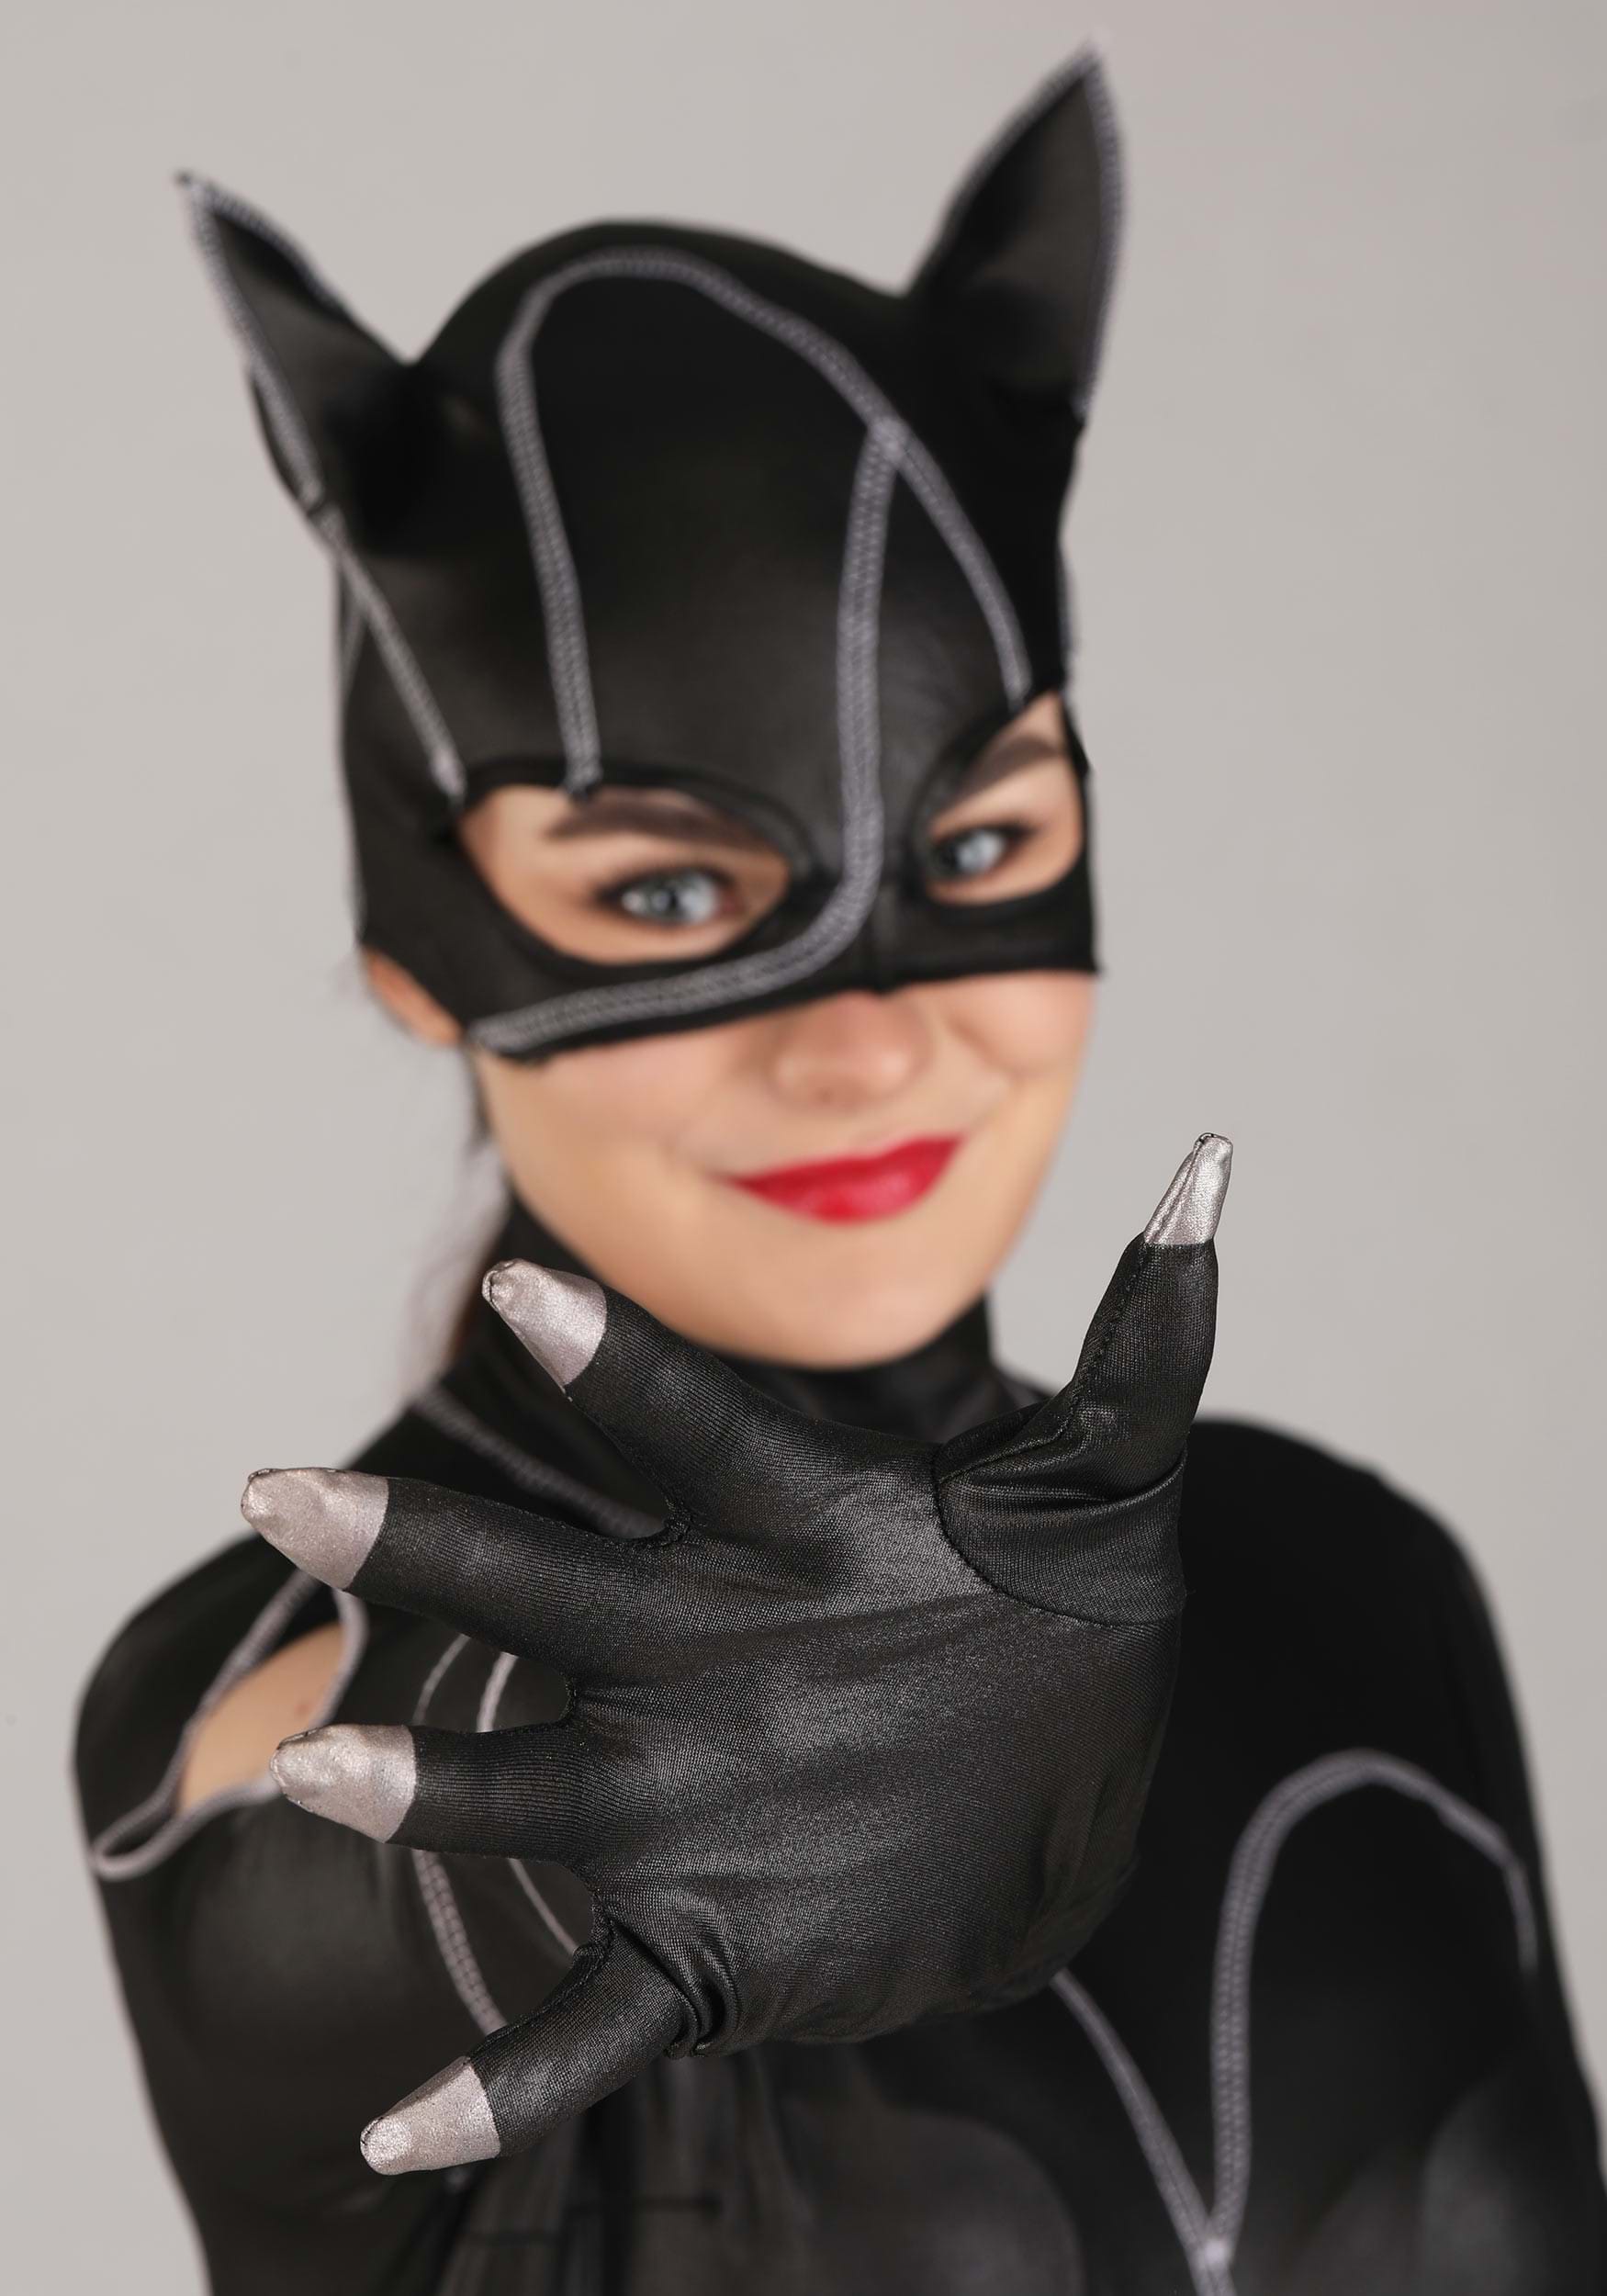 Catwoman Deluxe Women's Costume , DC Women's Costumes